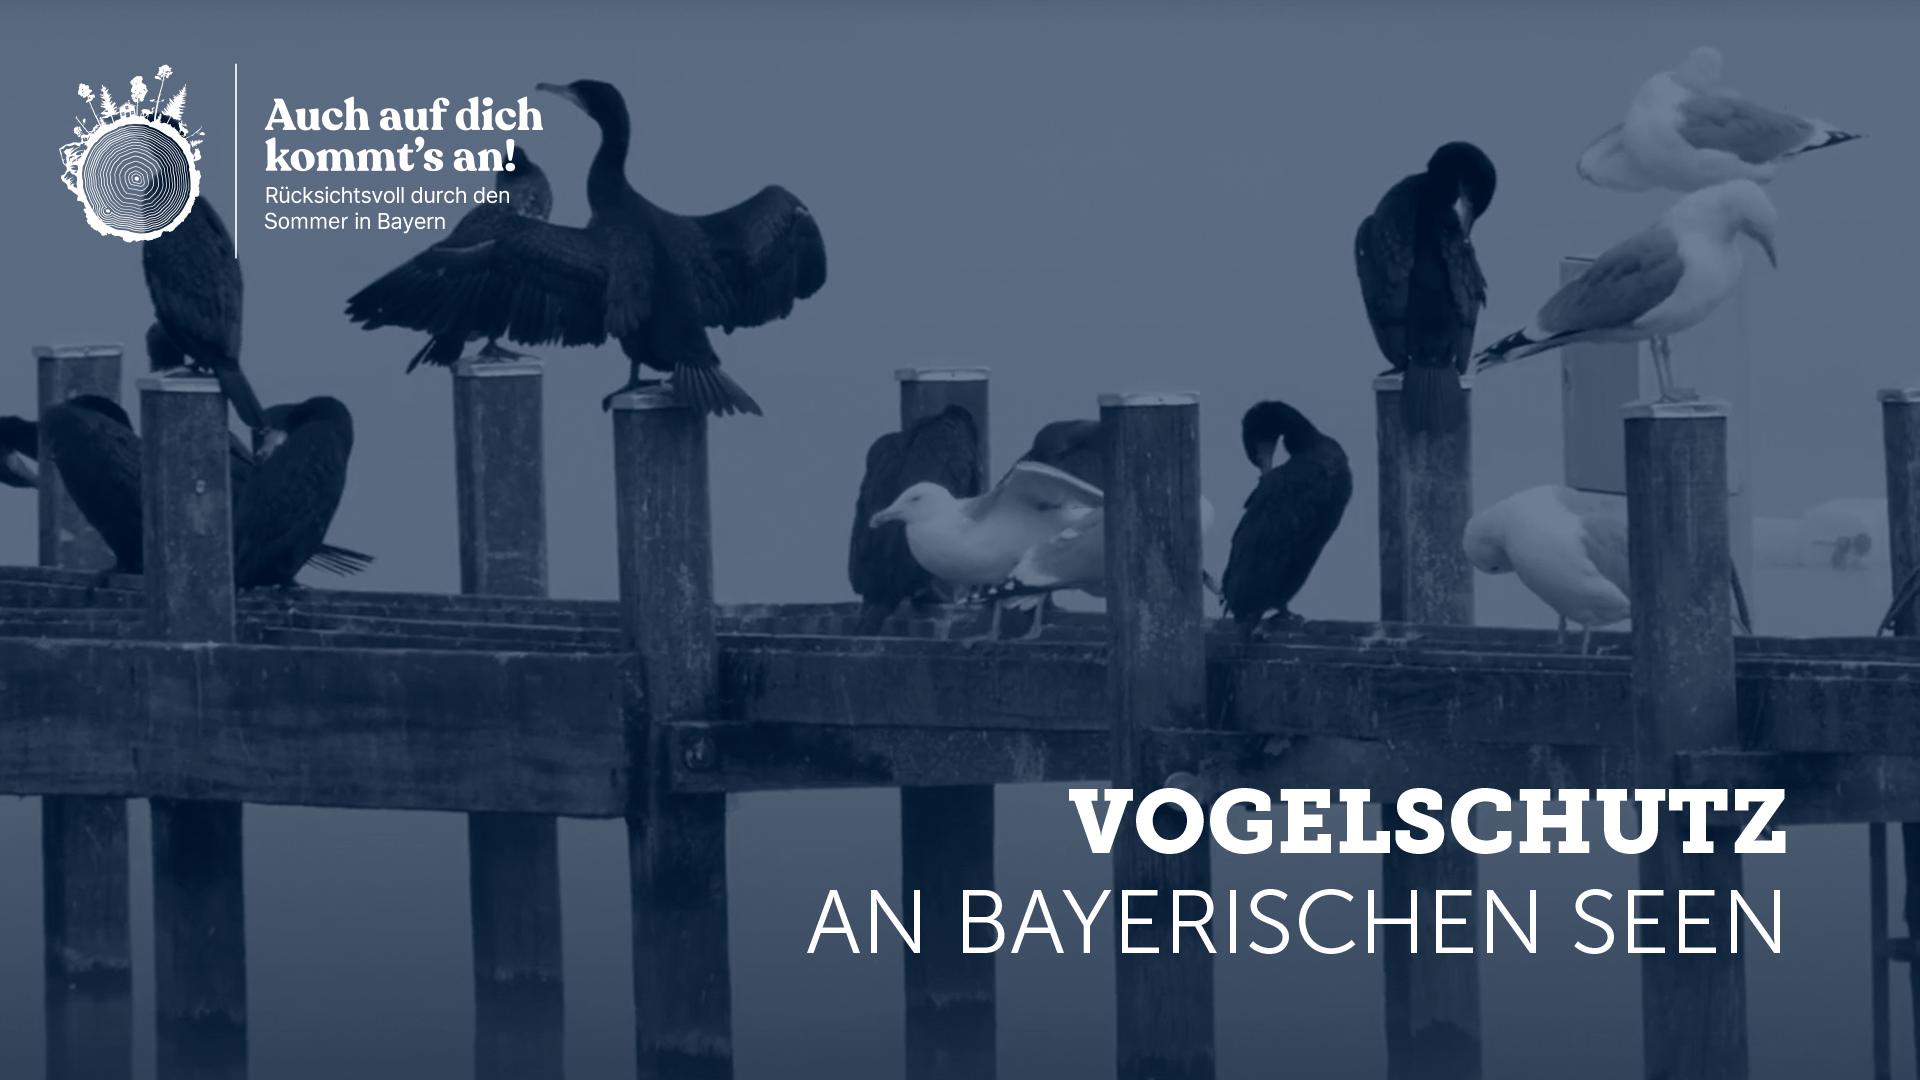 Video: Vogelschutz an den Bayerischen Seen